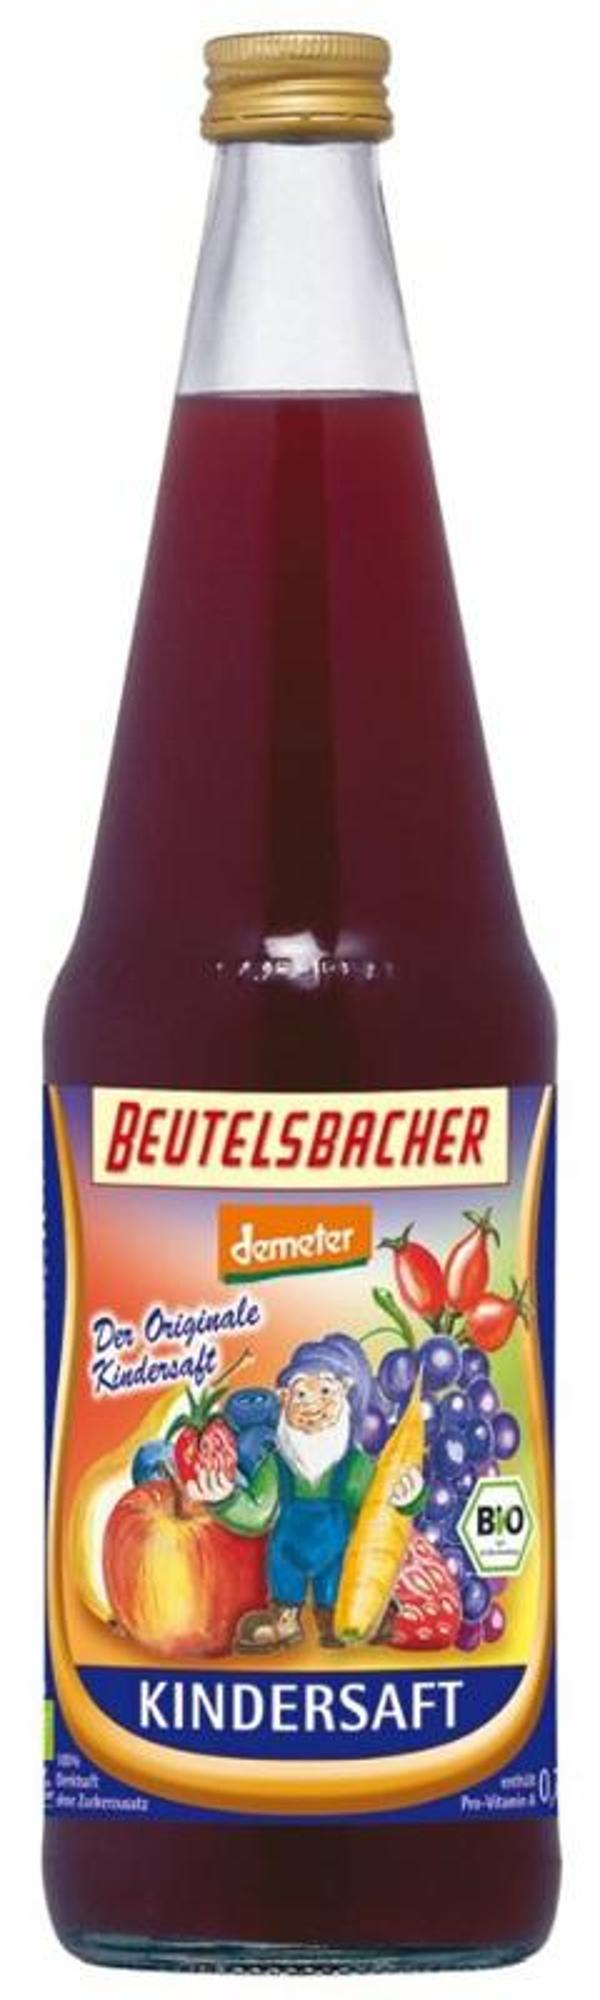 Produktfoto zu Kindersaft Beutelsbacher 0,7l